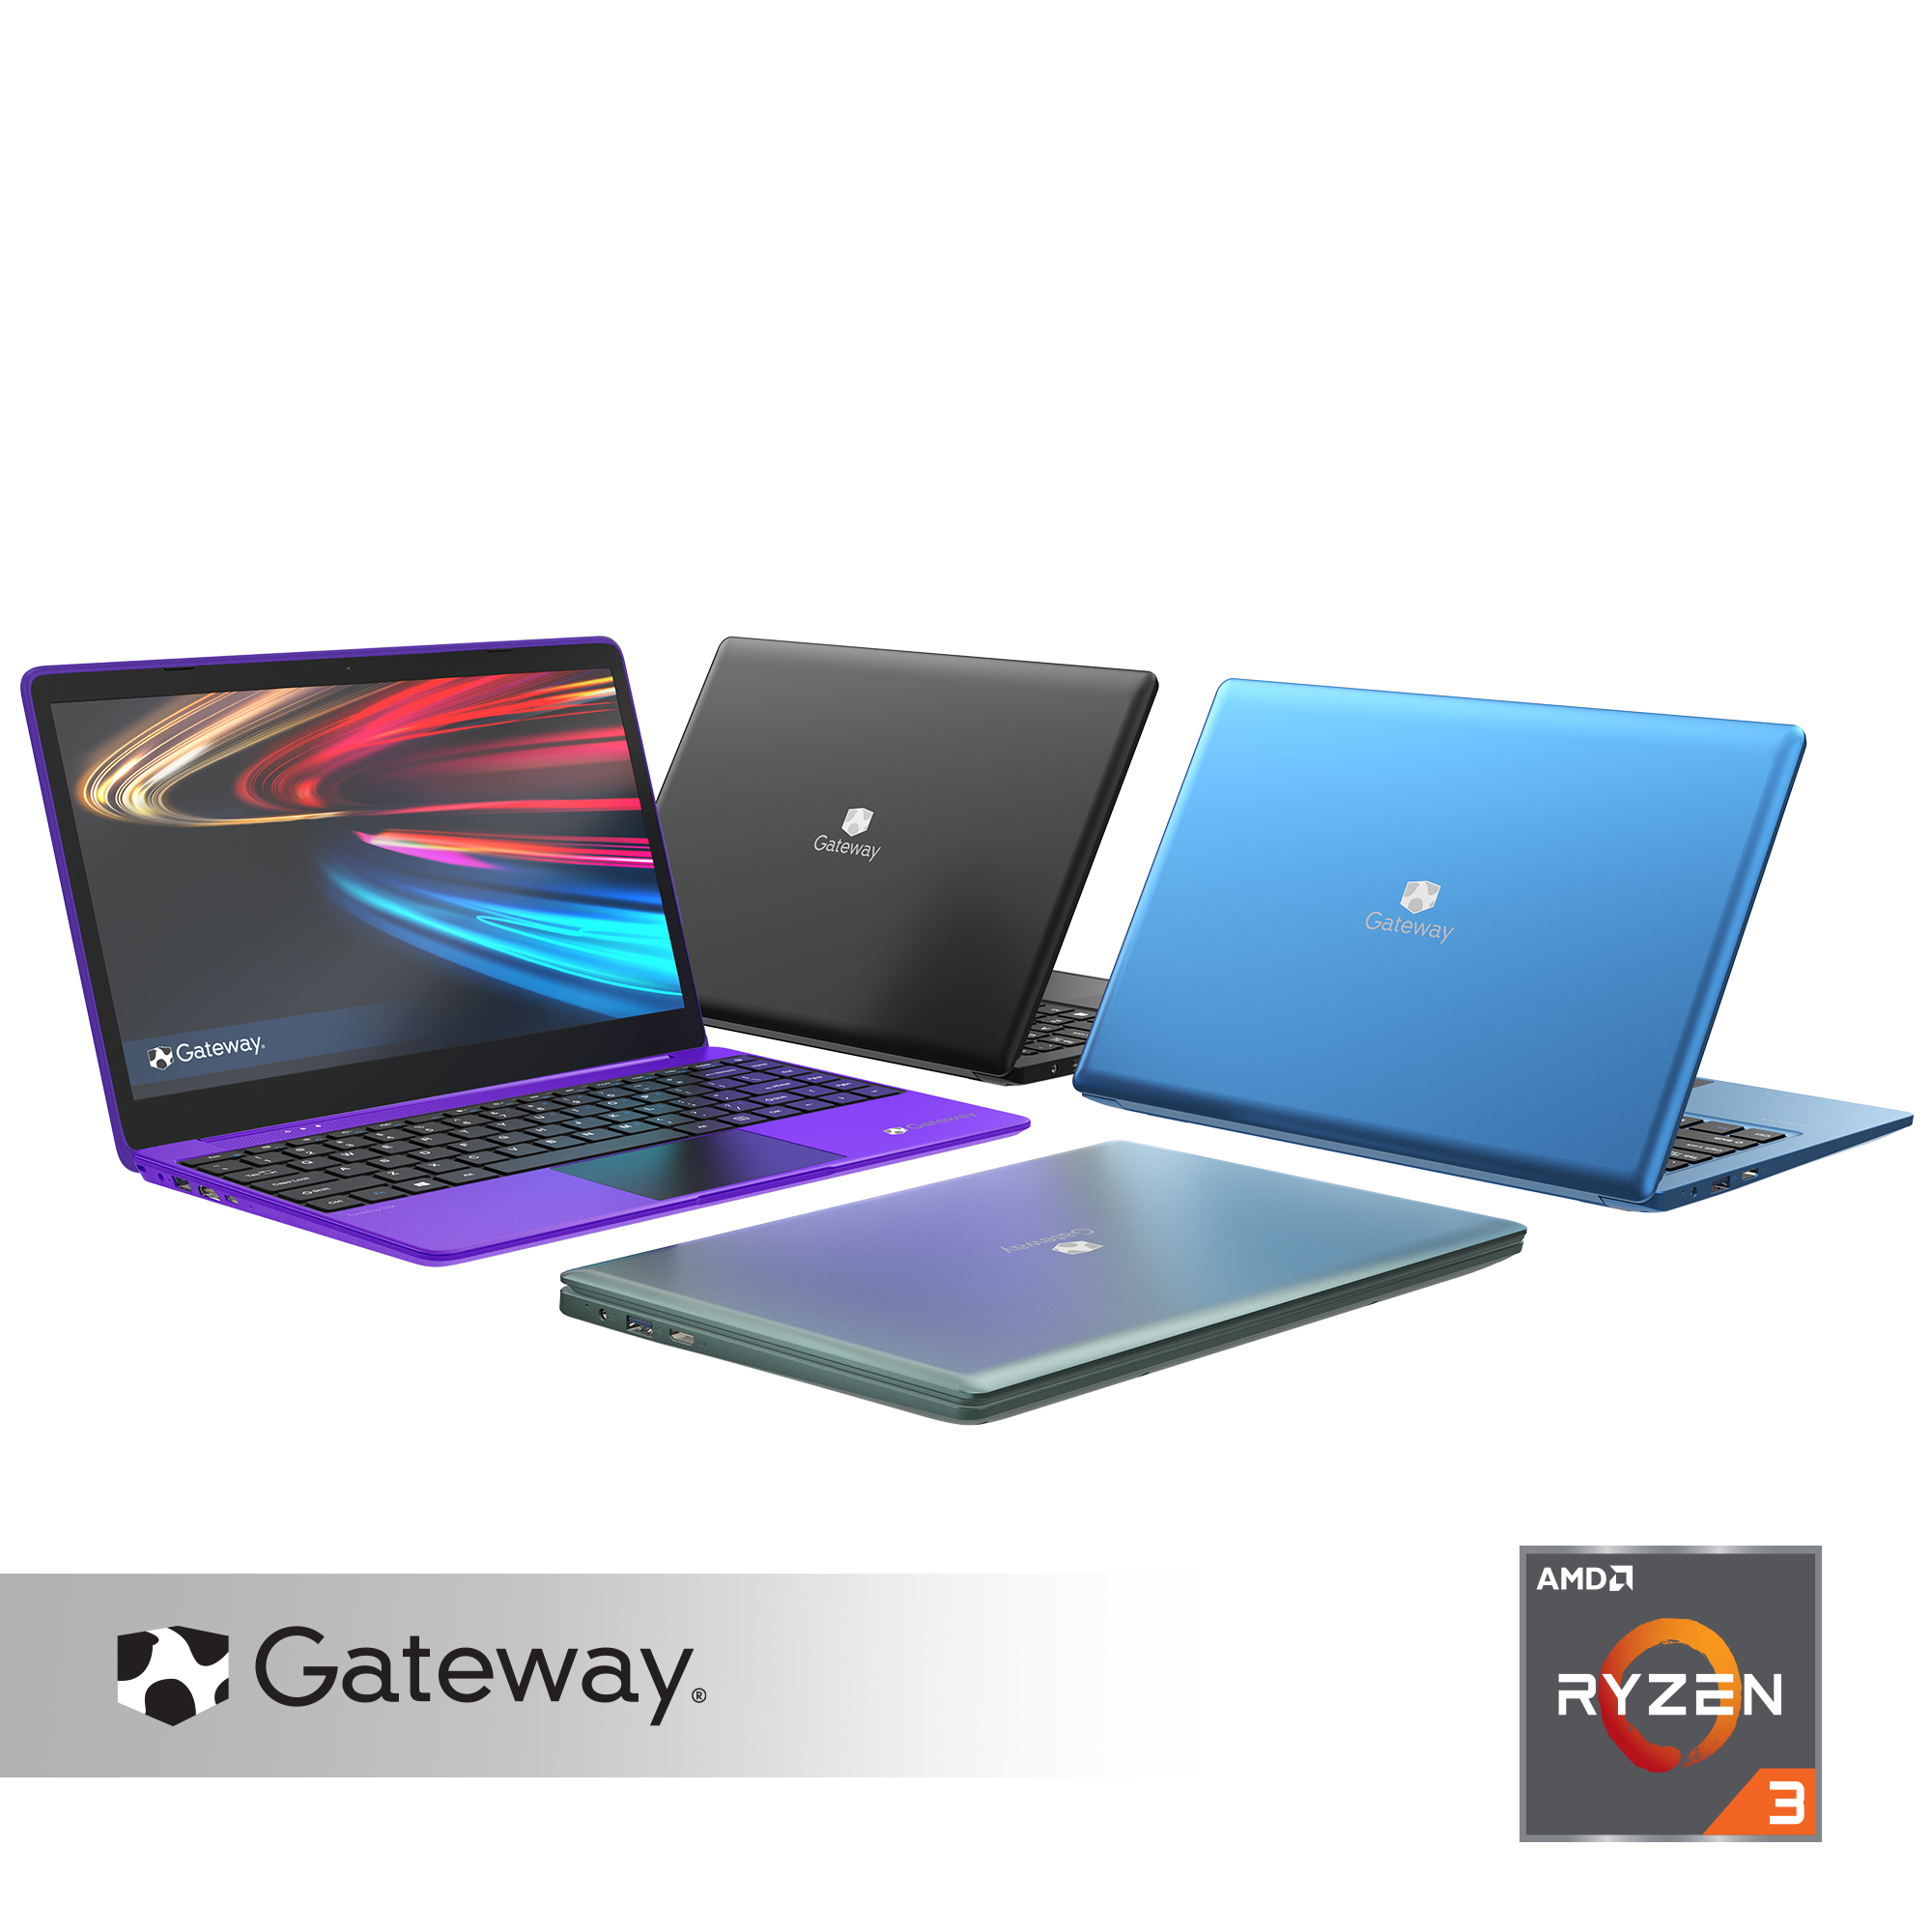 Gateway 14.1" 1080p PC Laptop, AMD Ryzen 3, 4GB RAM, 128GB SSD, Windows 10, Black, GWTN141-2BK - image 1 of 10